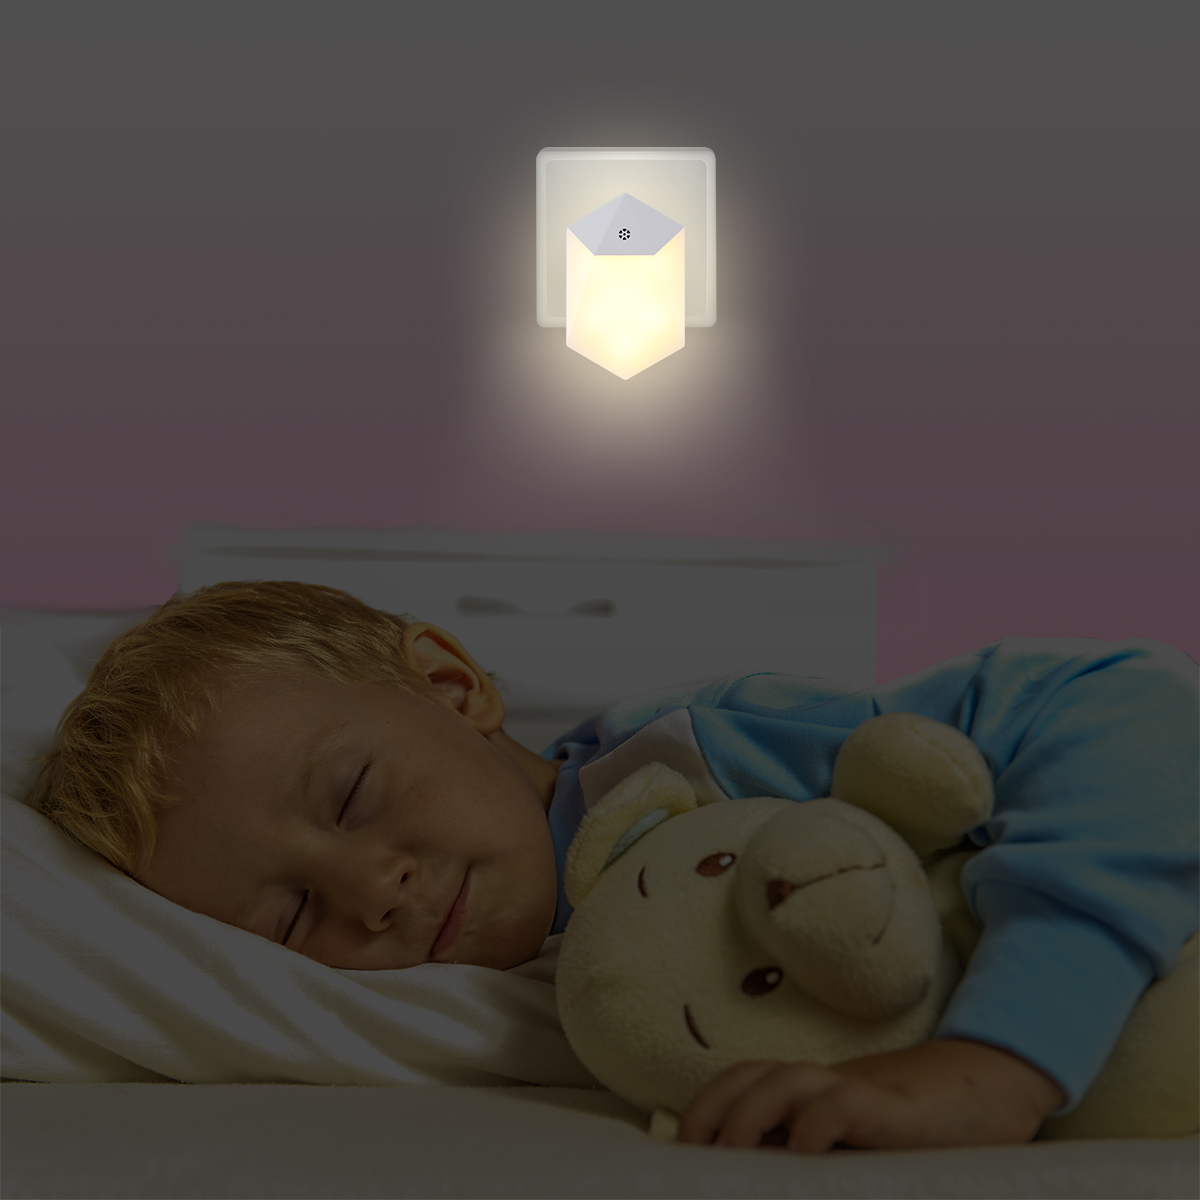 05W-6-LED-Light-controlled-Night-Light-Wall-Hallway-Bathroom-Bedroom-Kid-Warm-White-Lamp-AC110-240V-1532642-3